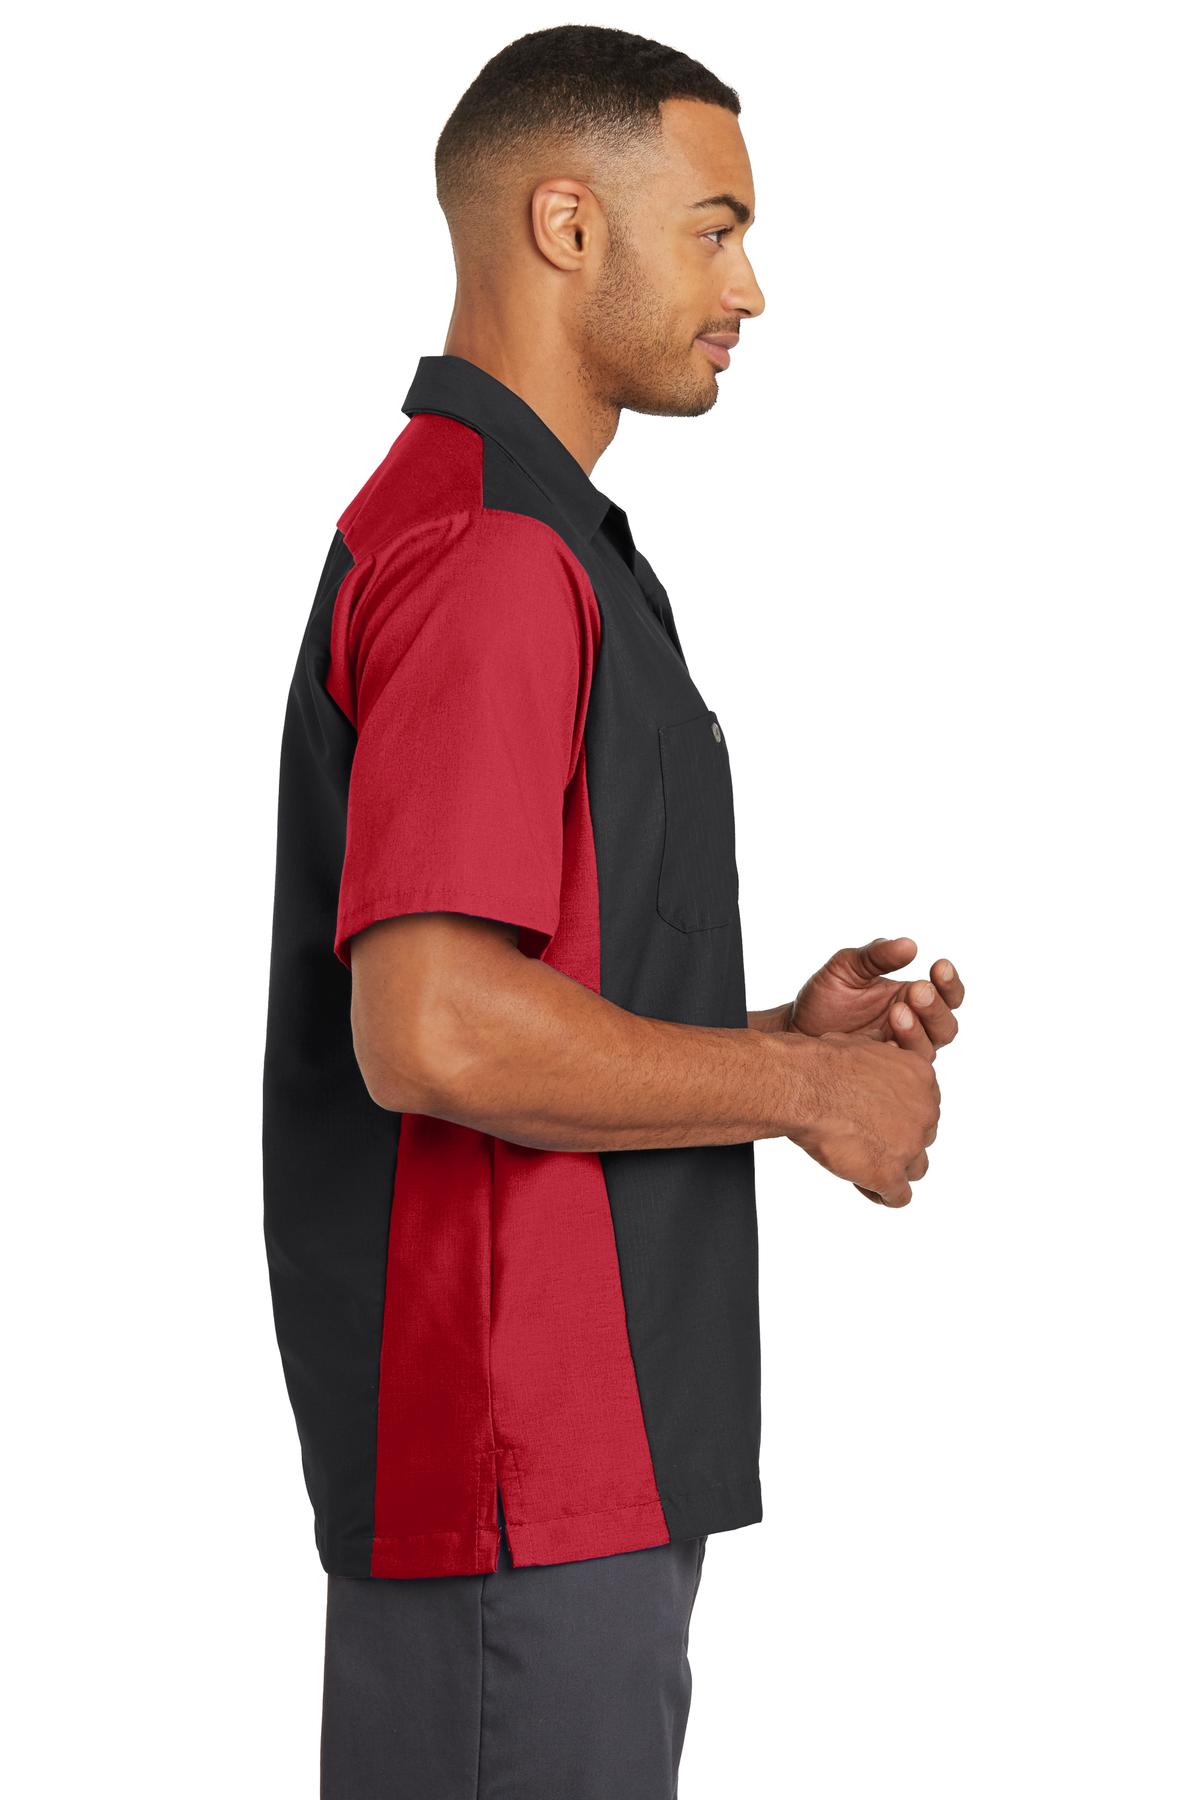 Red Kap Short Sleeve Ripstop Crew Shirt. SY20 - BT Imprintables Shirts